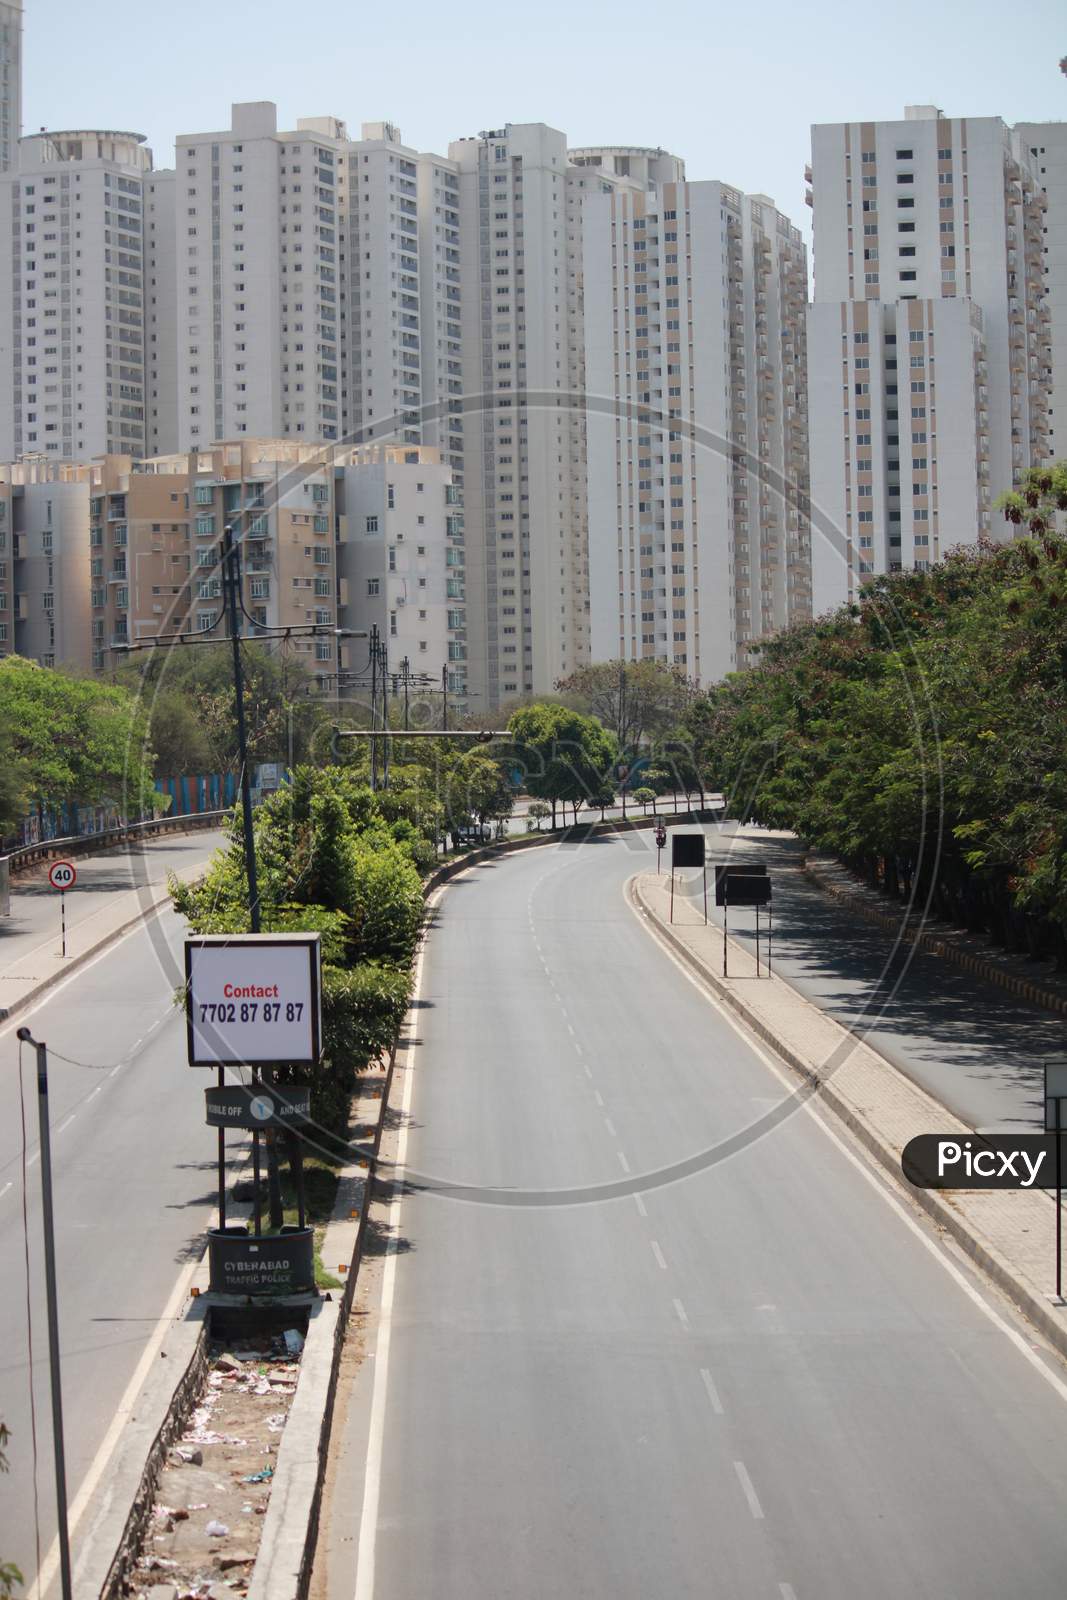 Roads Towards Hi-Tech City Seems Empty Today